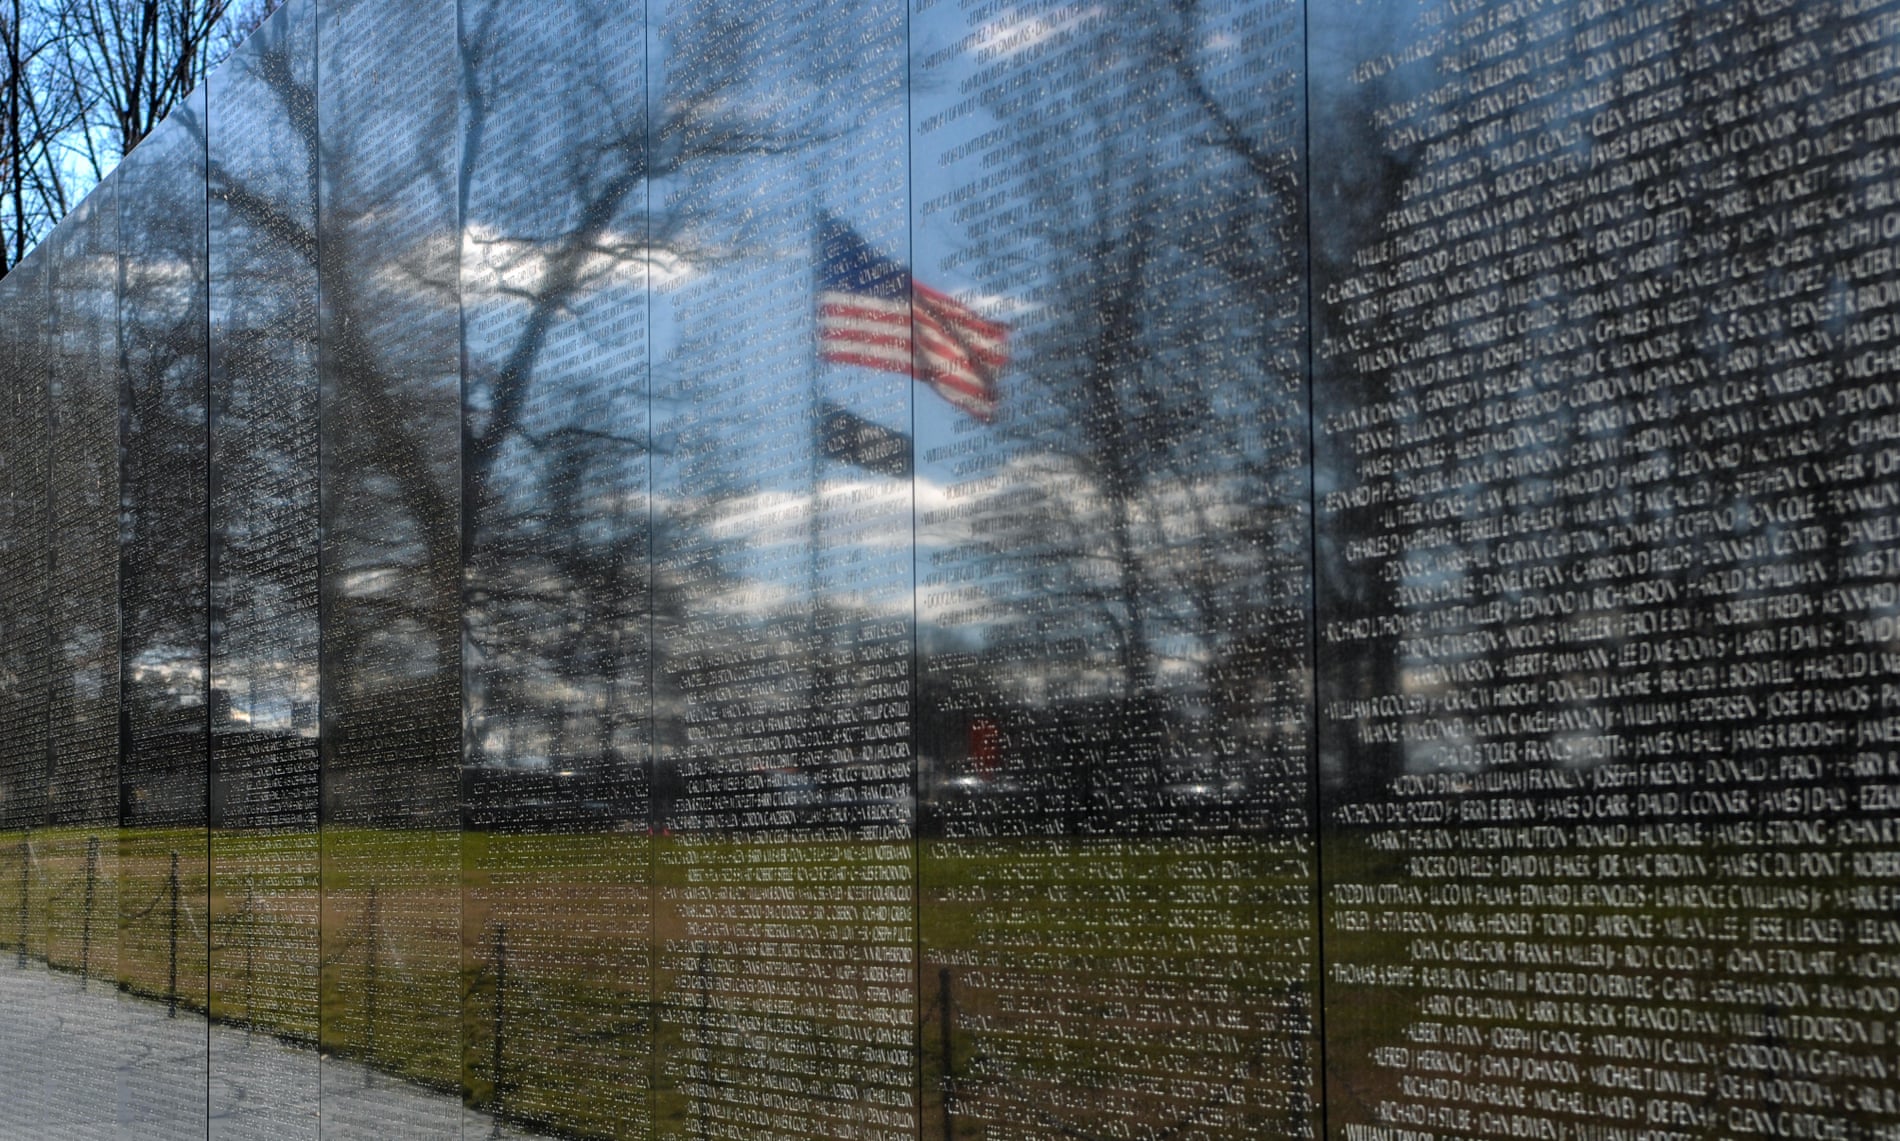 The Vietnam Memorial in Washington.